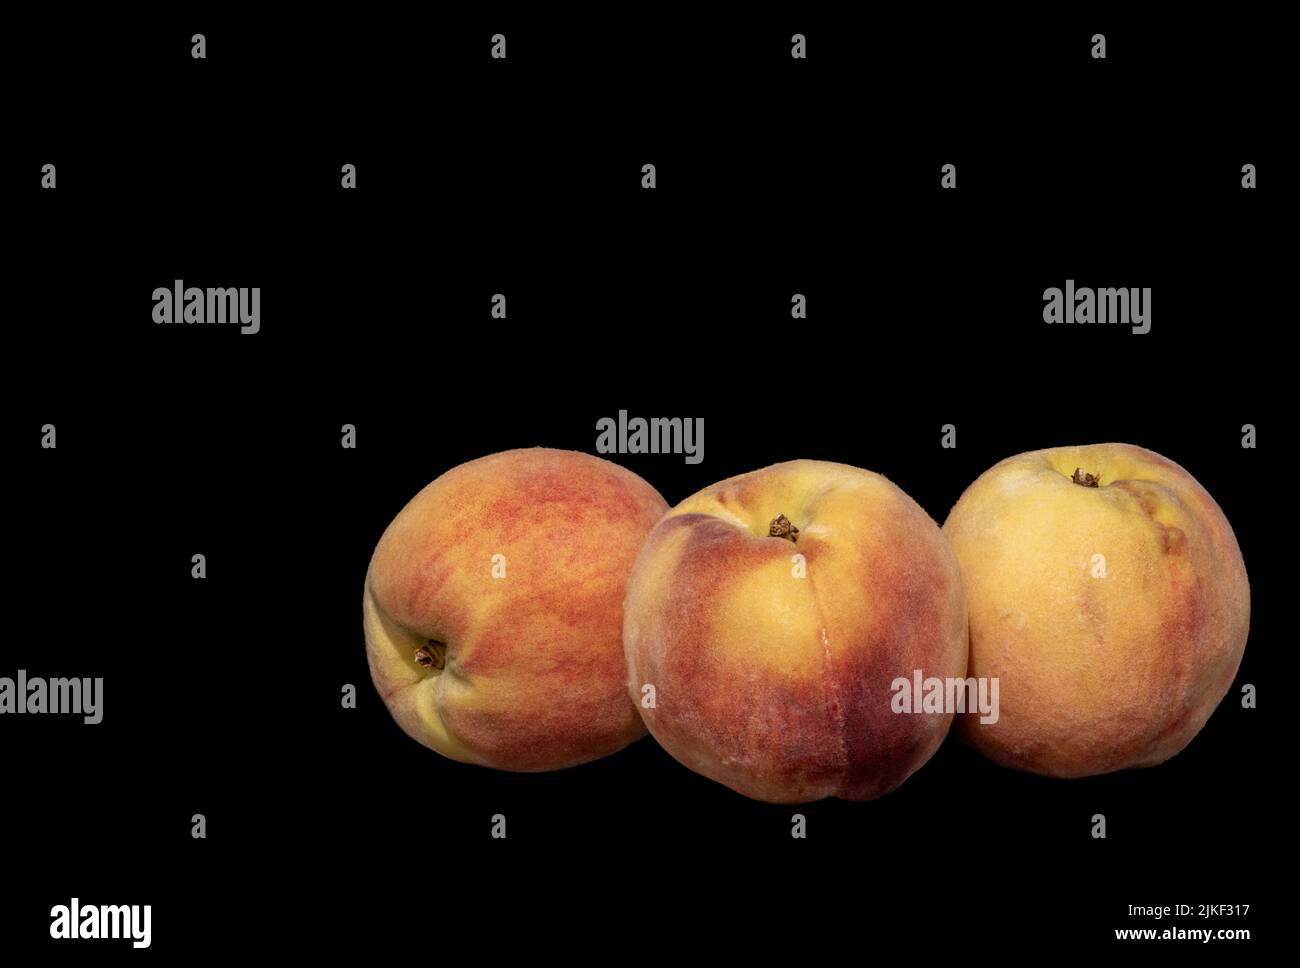 Image of three ripe peaches on black background Stock Photo